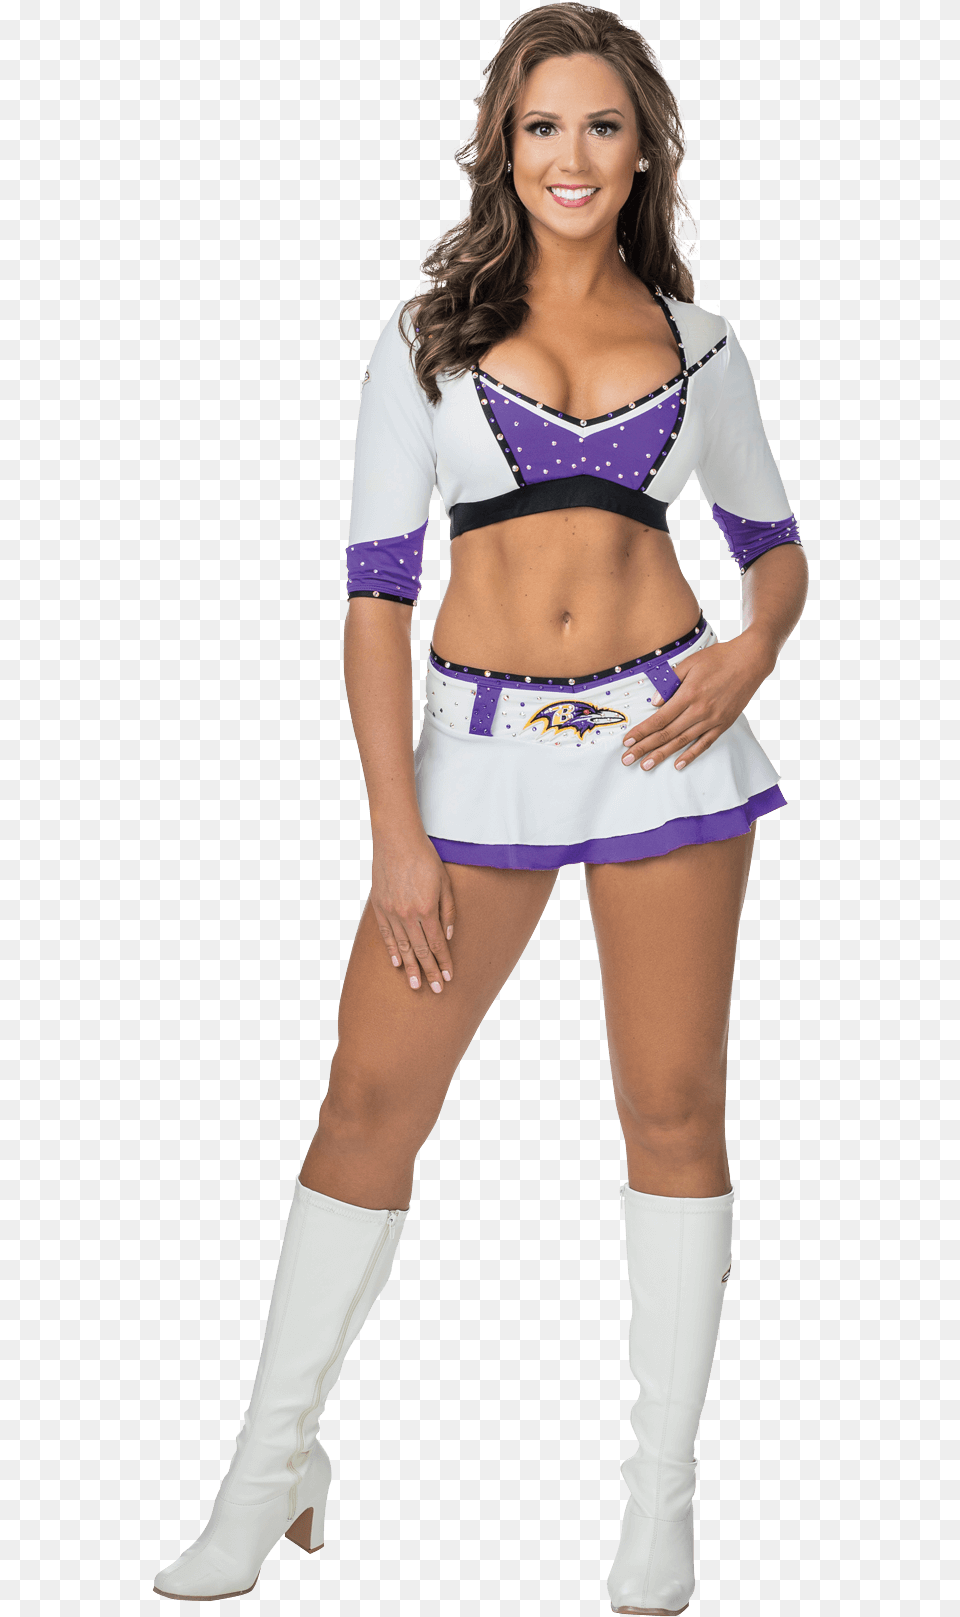 Result For Baltimore Ravens Cheerleaders 2016 Costume, Miniskirt, Clothing, Skirt, Person Png Image